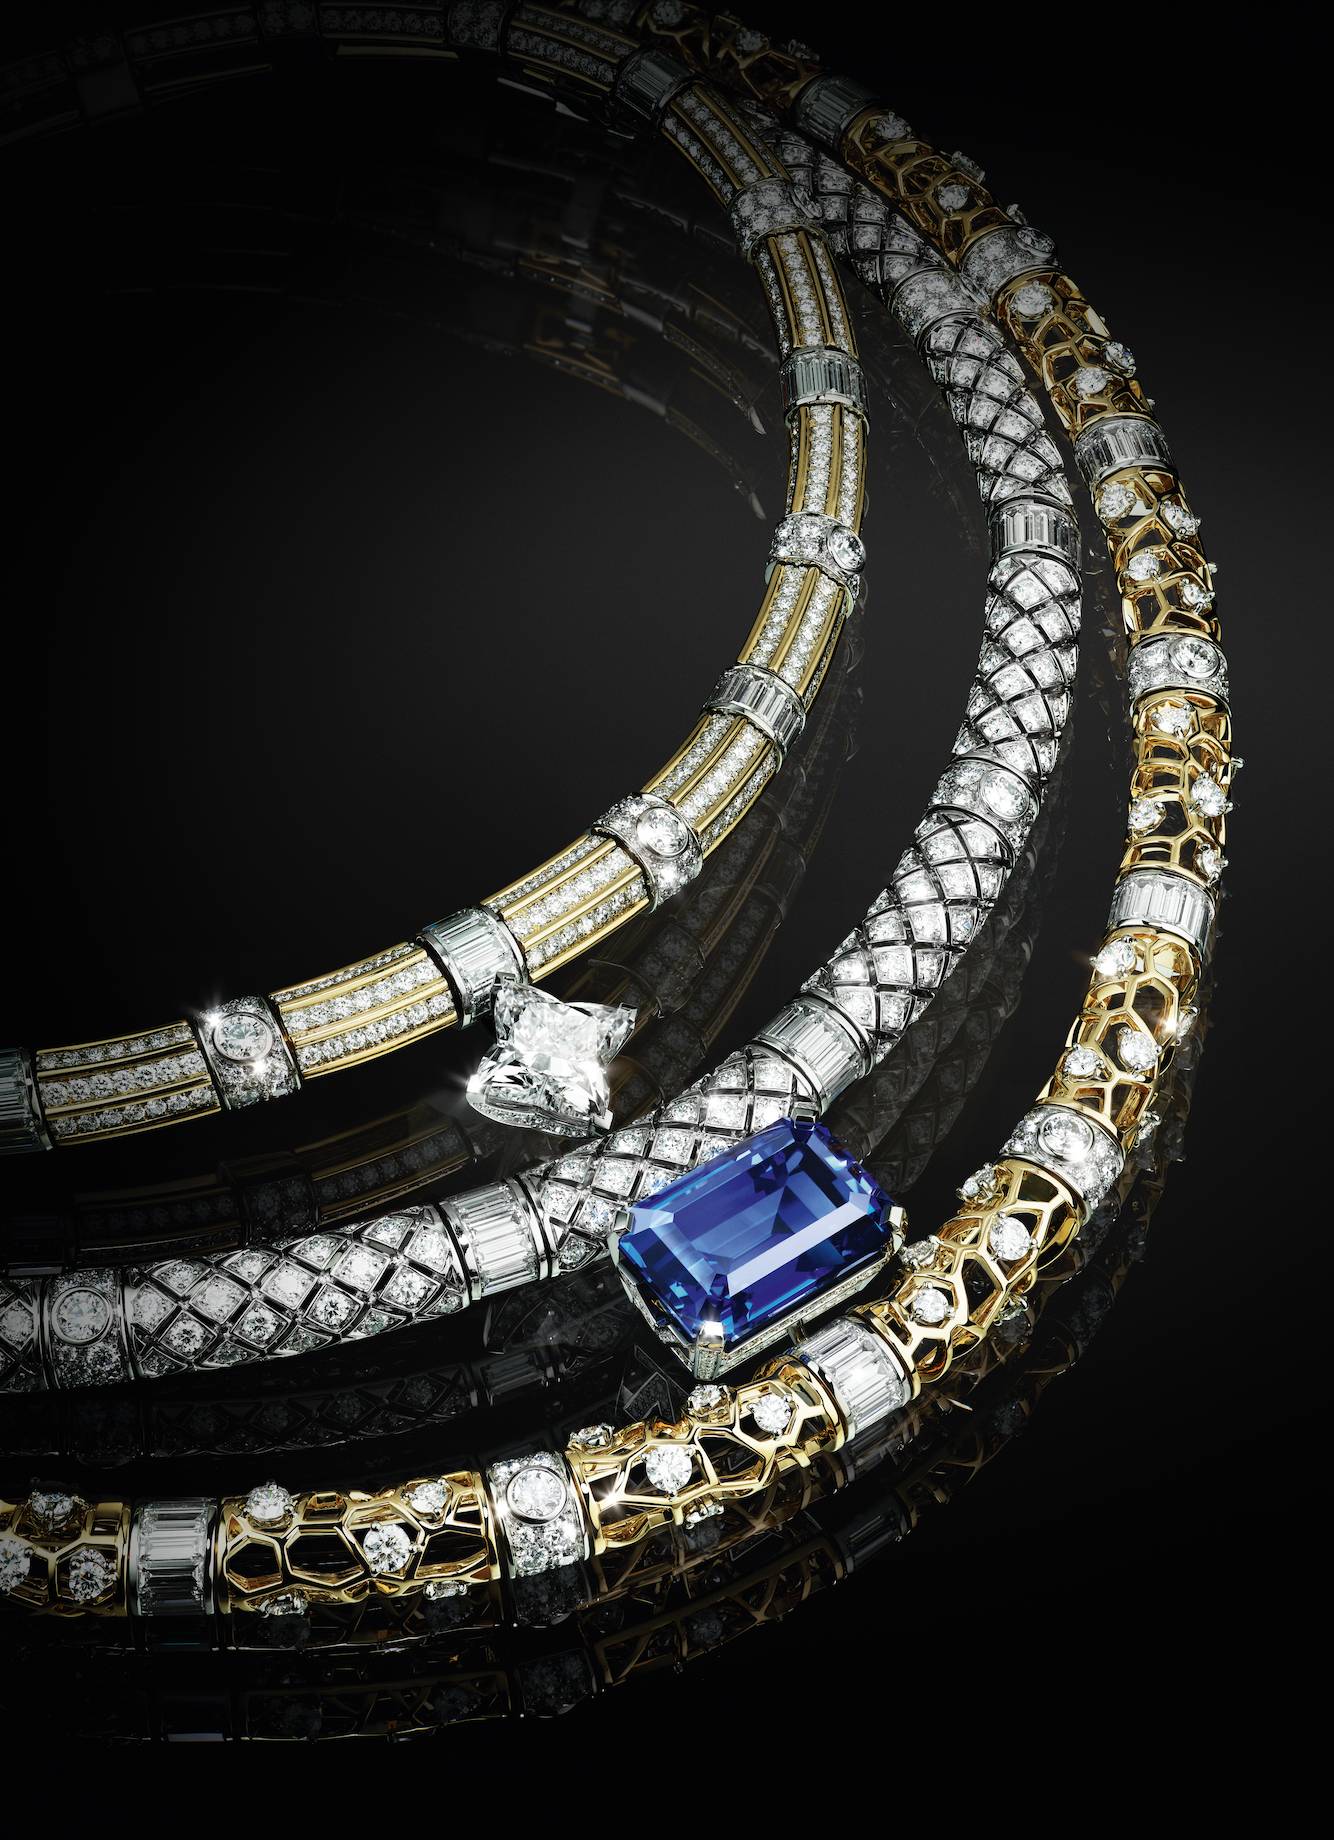 Louis Vuitton High Jewelry Diamond White Gold Tennis Bracelet